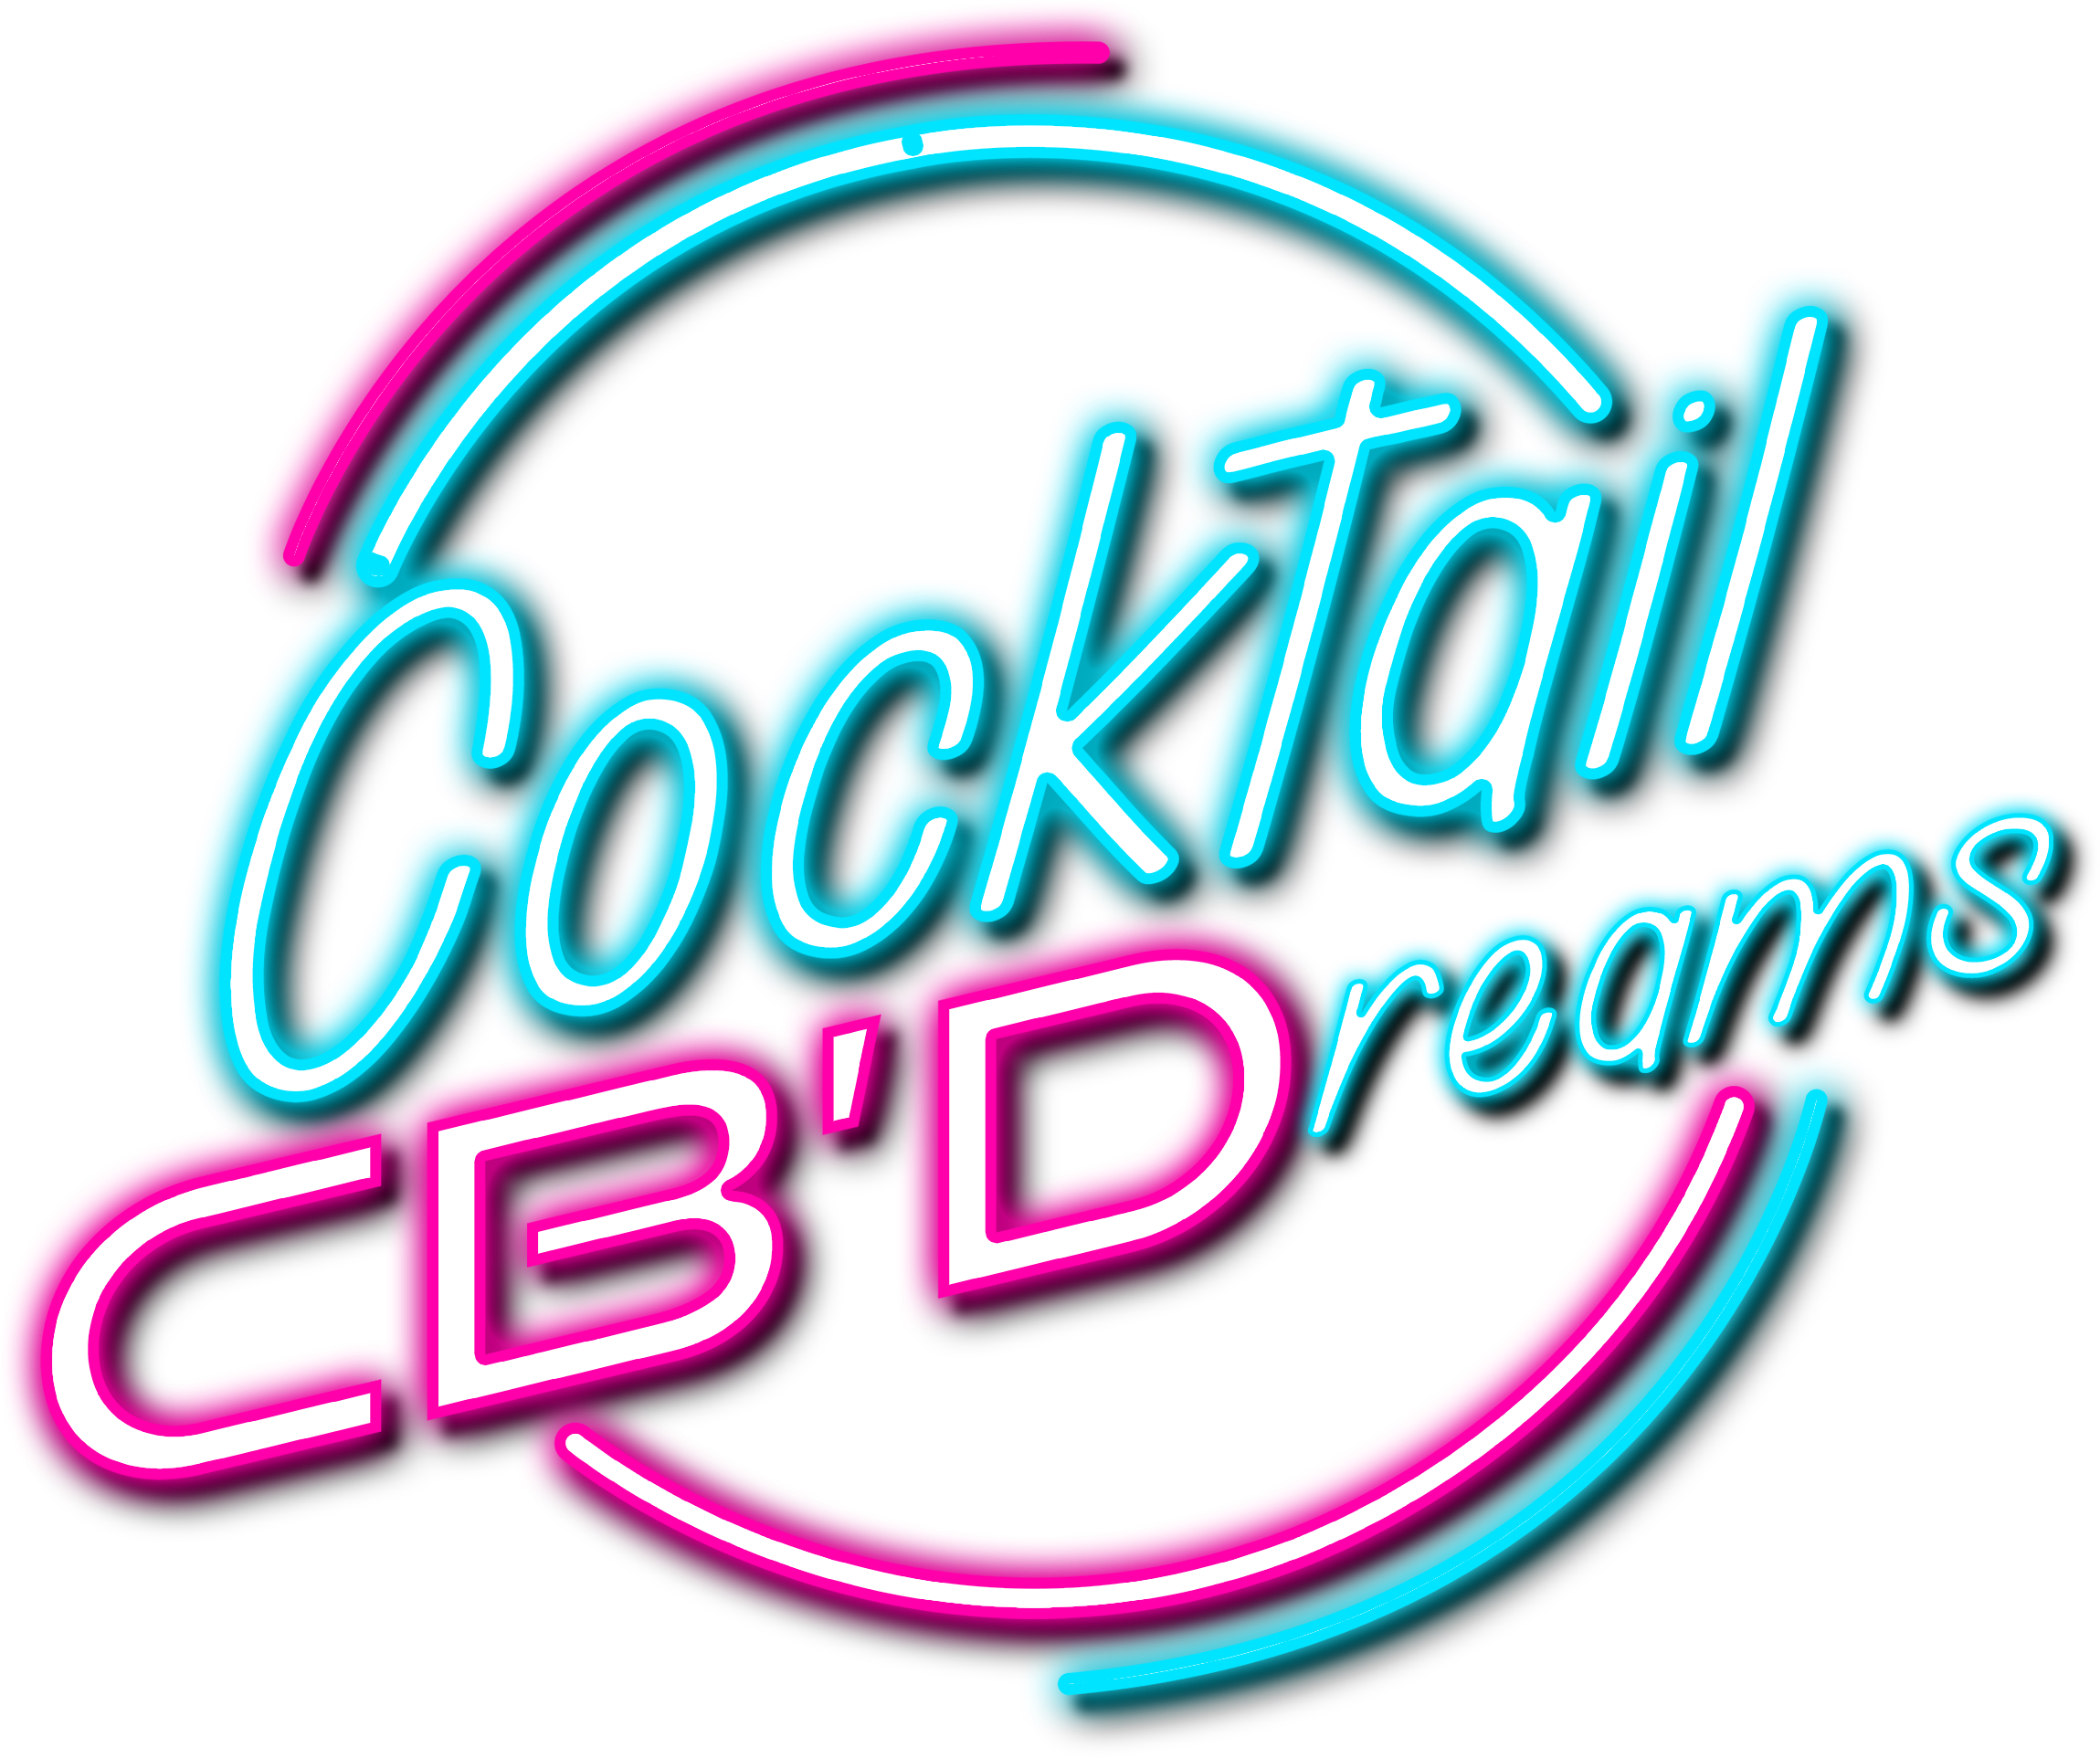 Cocktail CB'Dreams